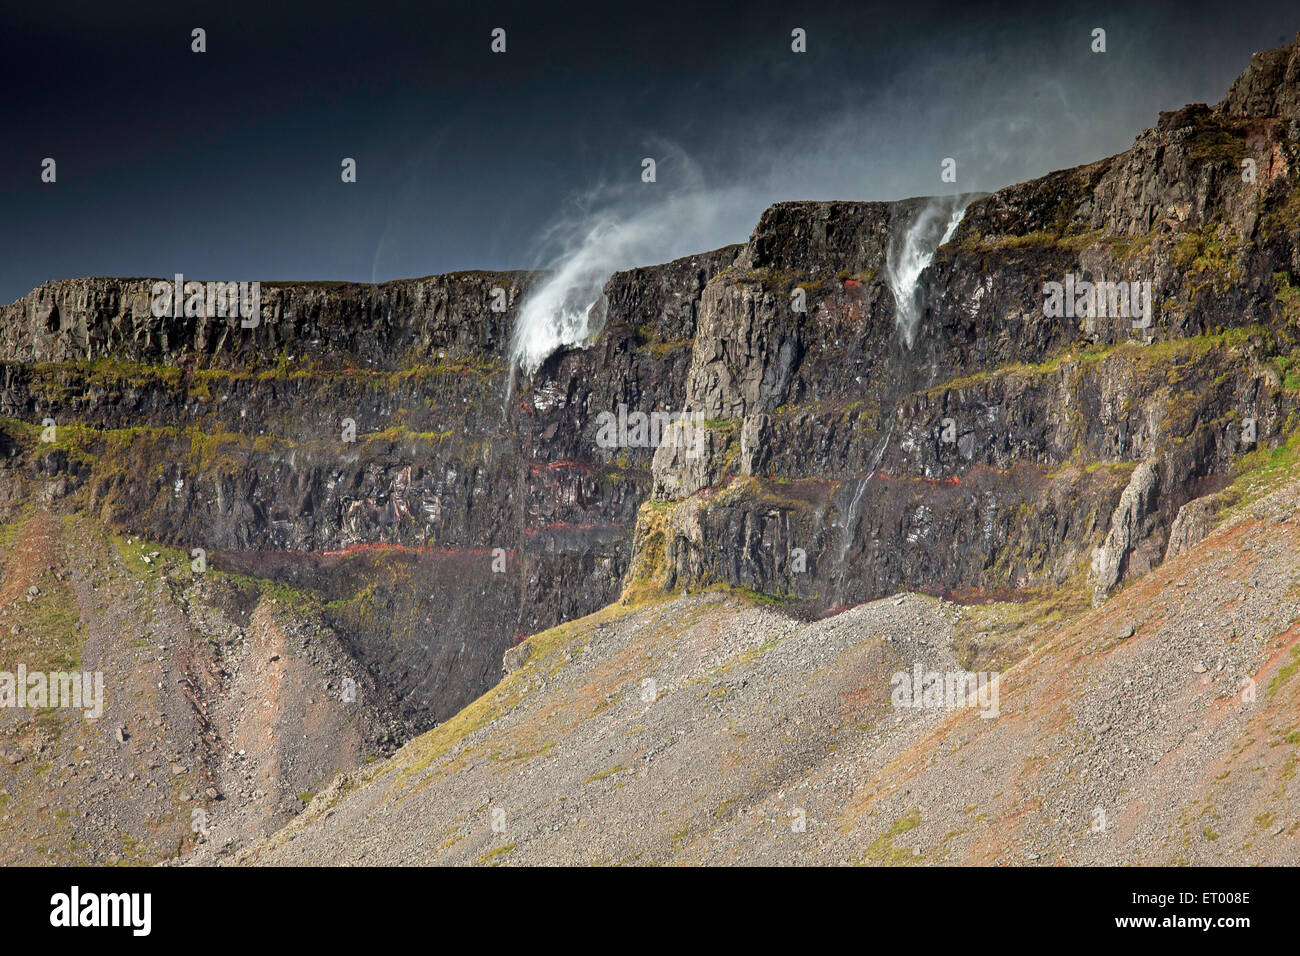 Water splashing over cliffs, Raudasandur, Iceland Stock Photo